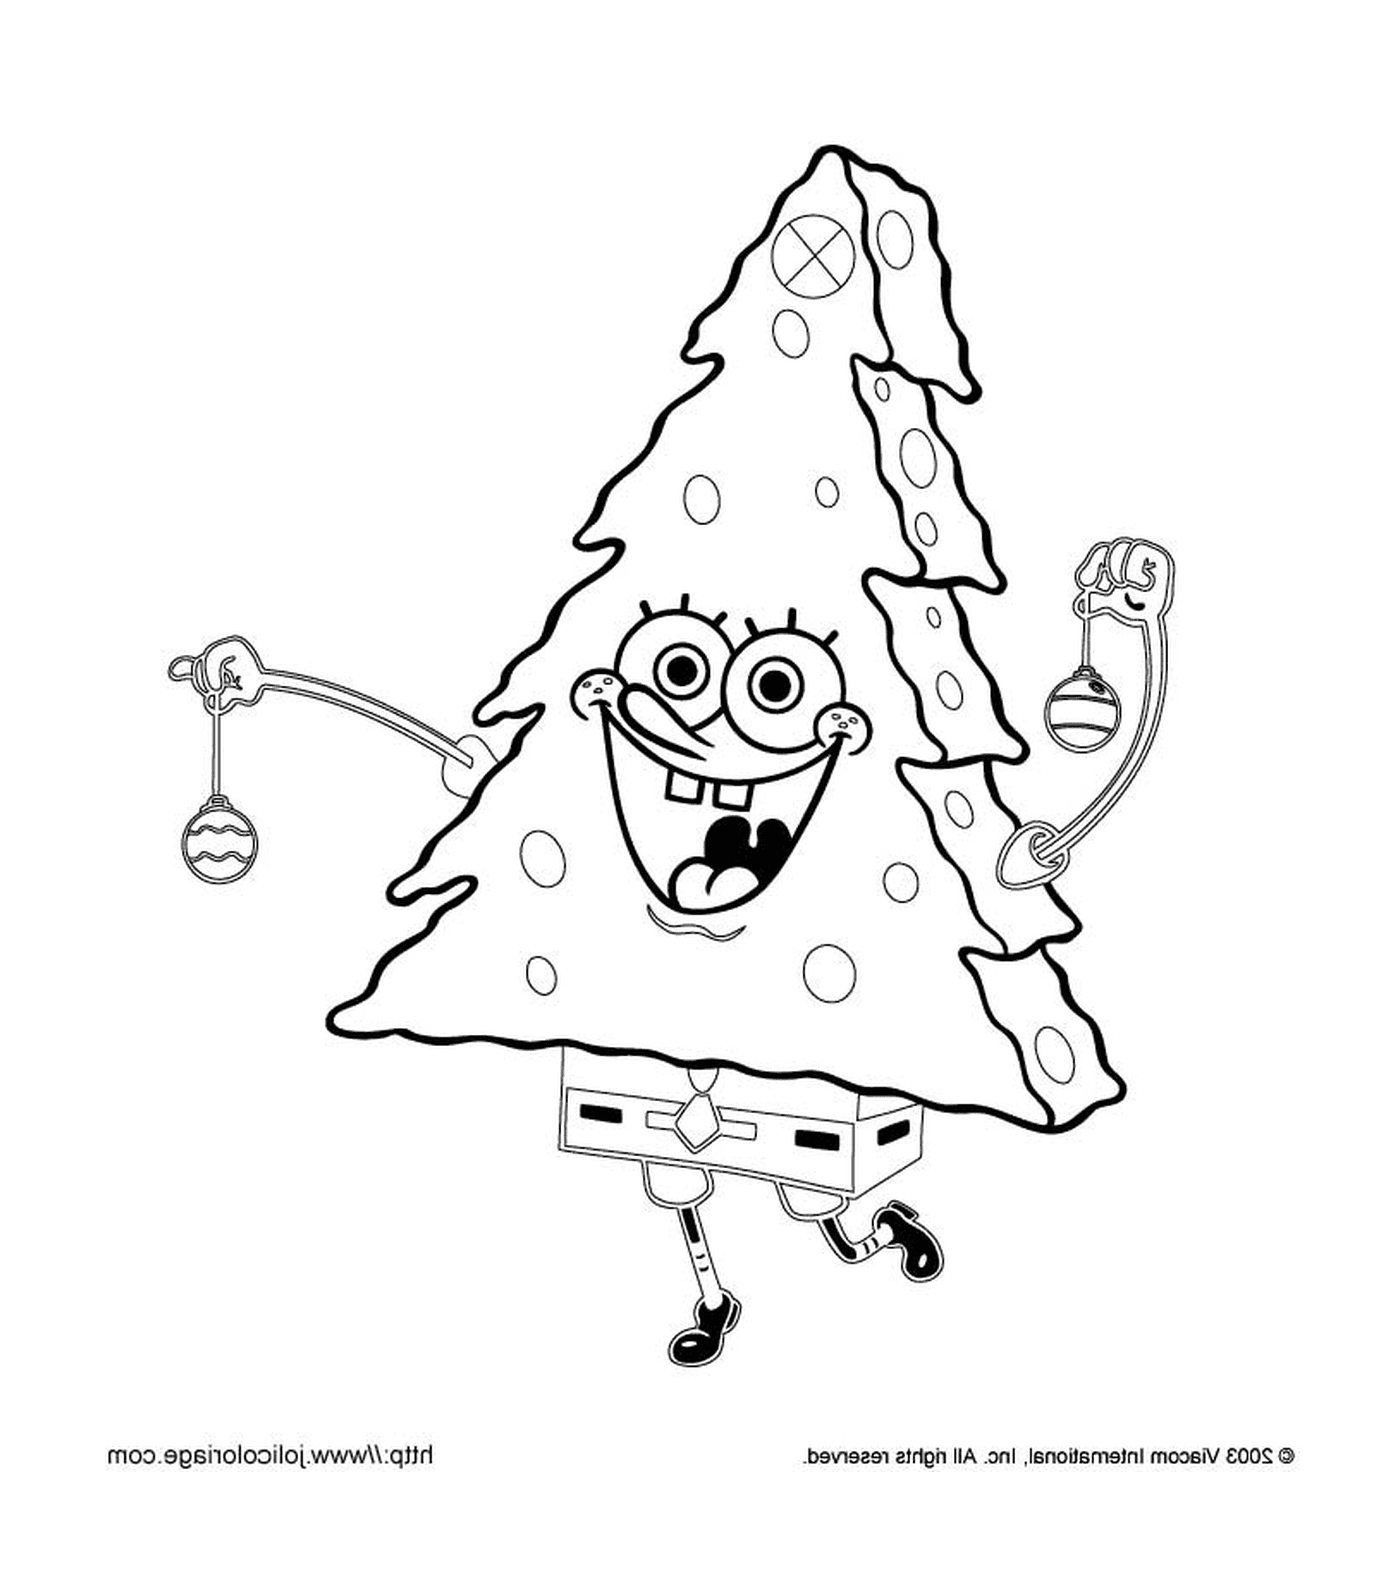  A Christmas tree with Bob the Sponge 